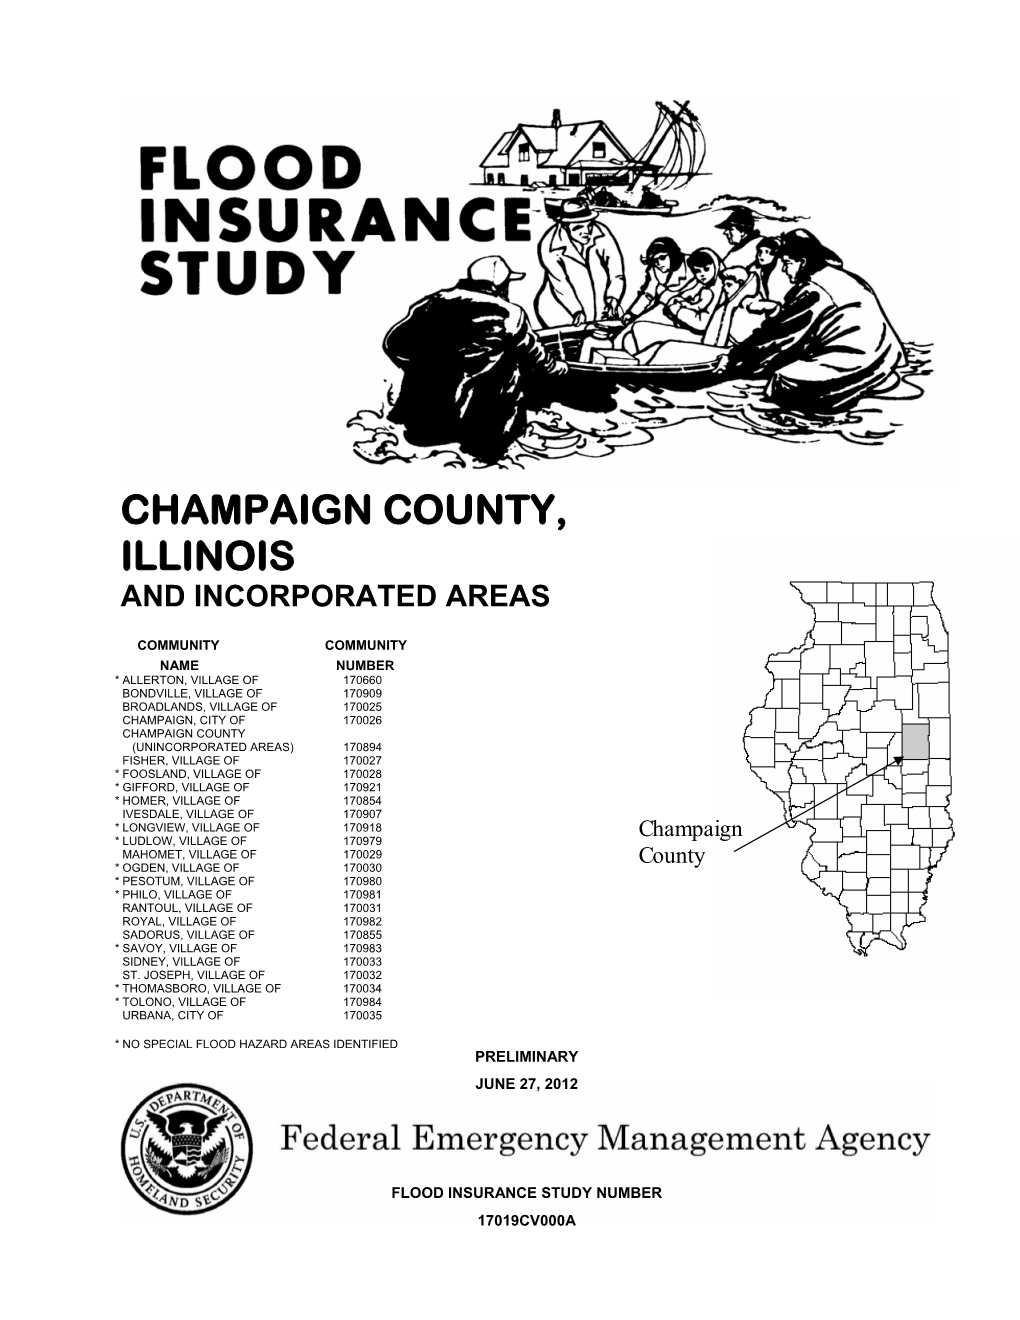 Preliminary Flood Insurance Study